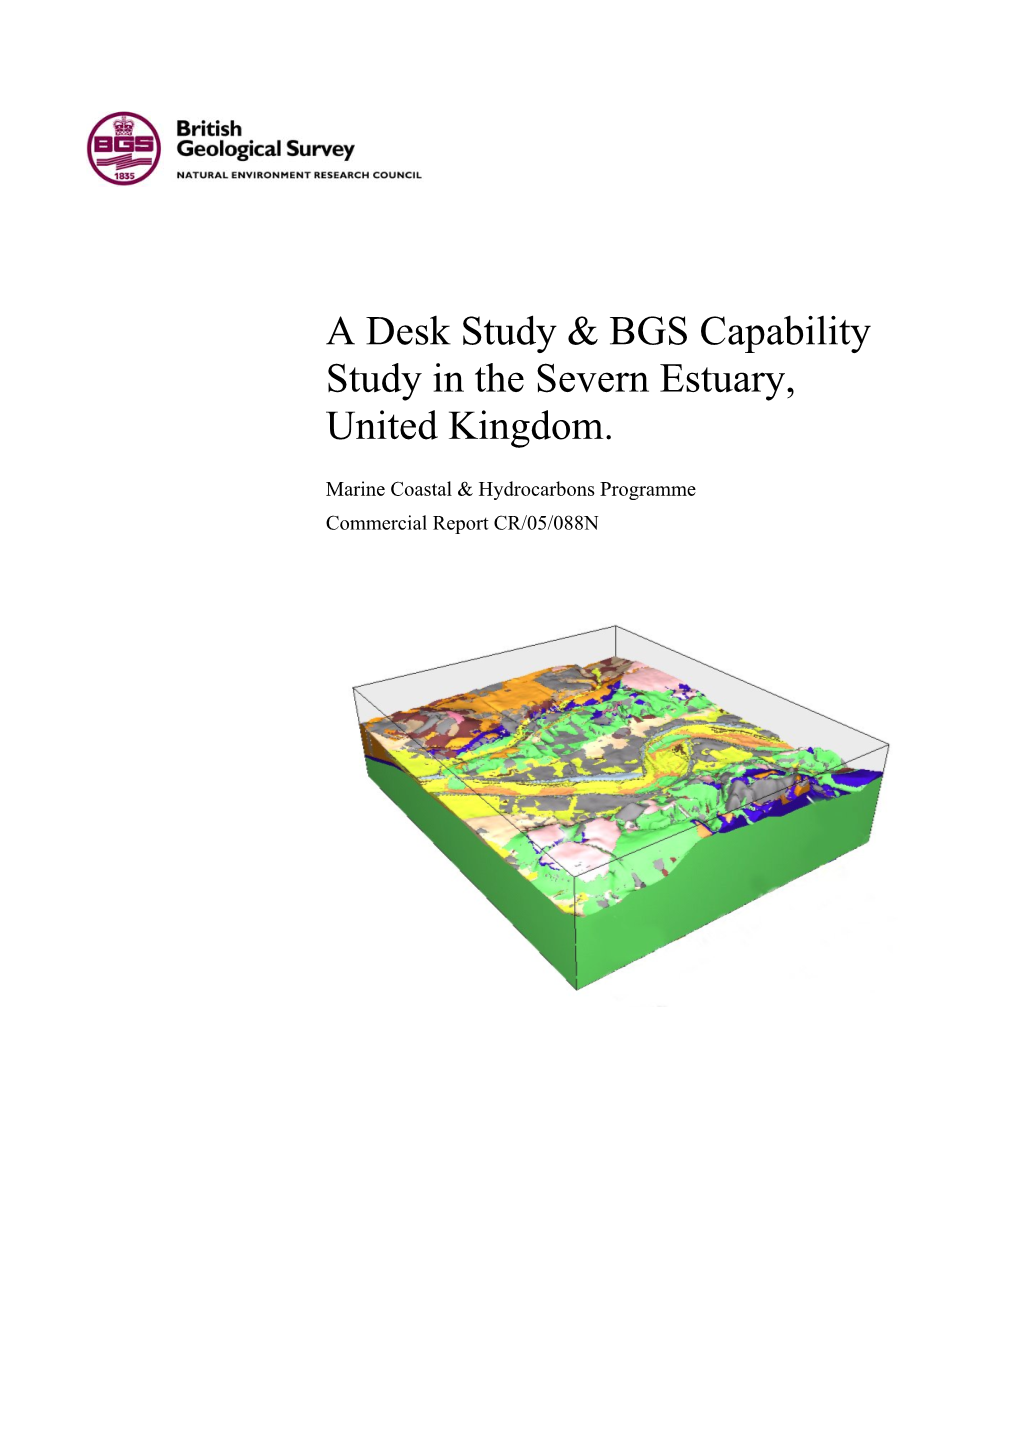 A Desk Study & BGS Capability Study in the Severn Estuary, United Kingdom